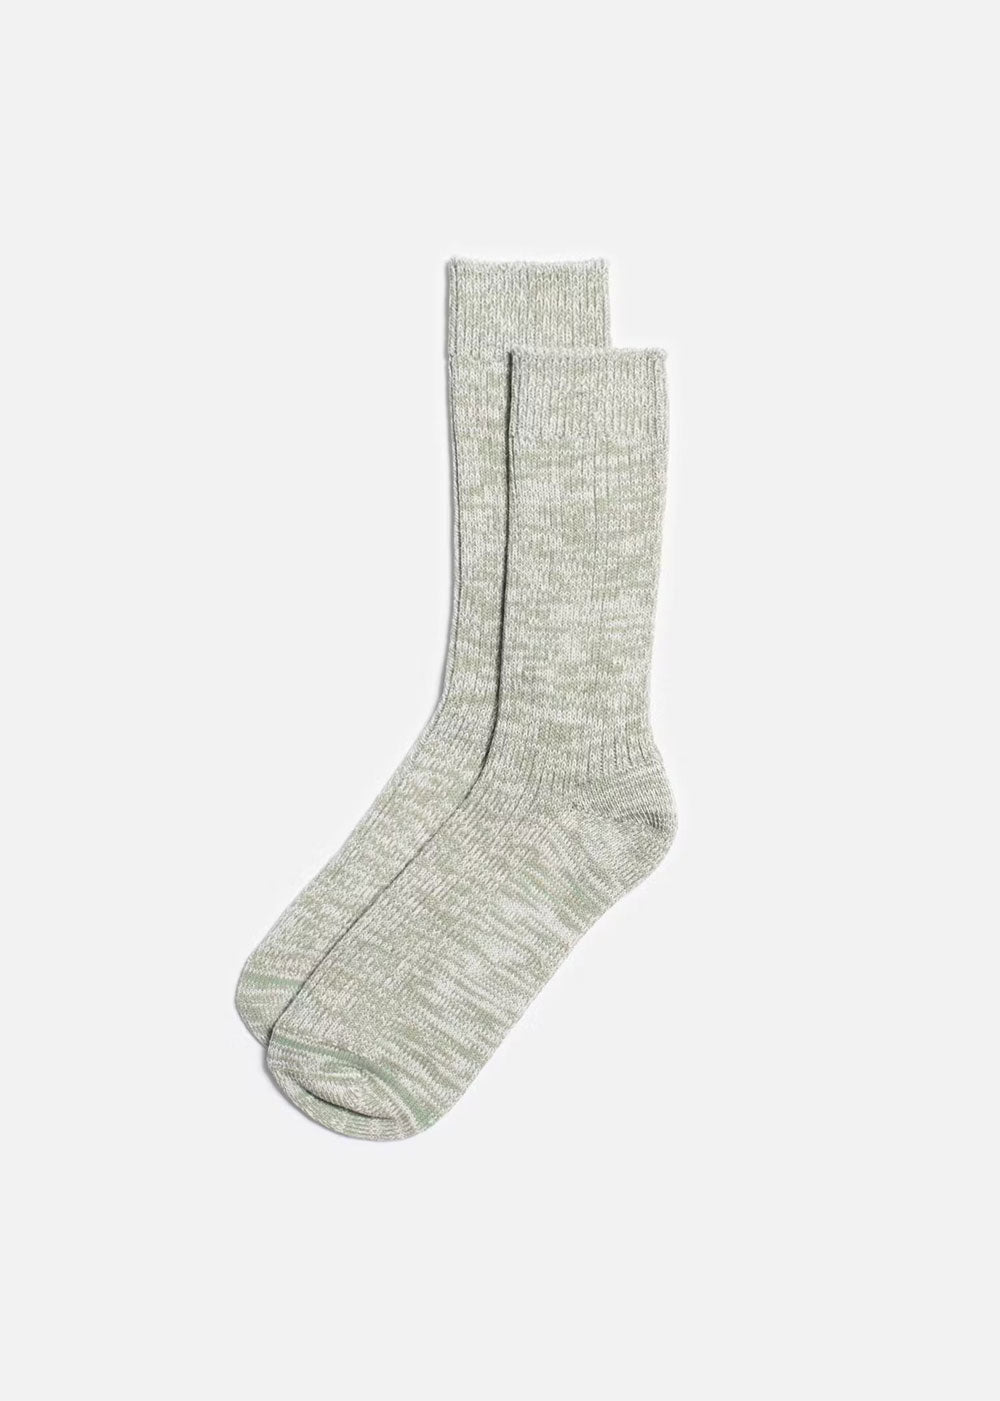 Chunky Socks - Green - Nudie Jeans - Danali